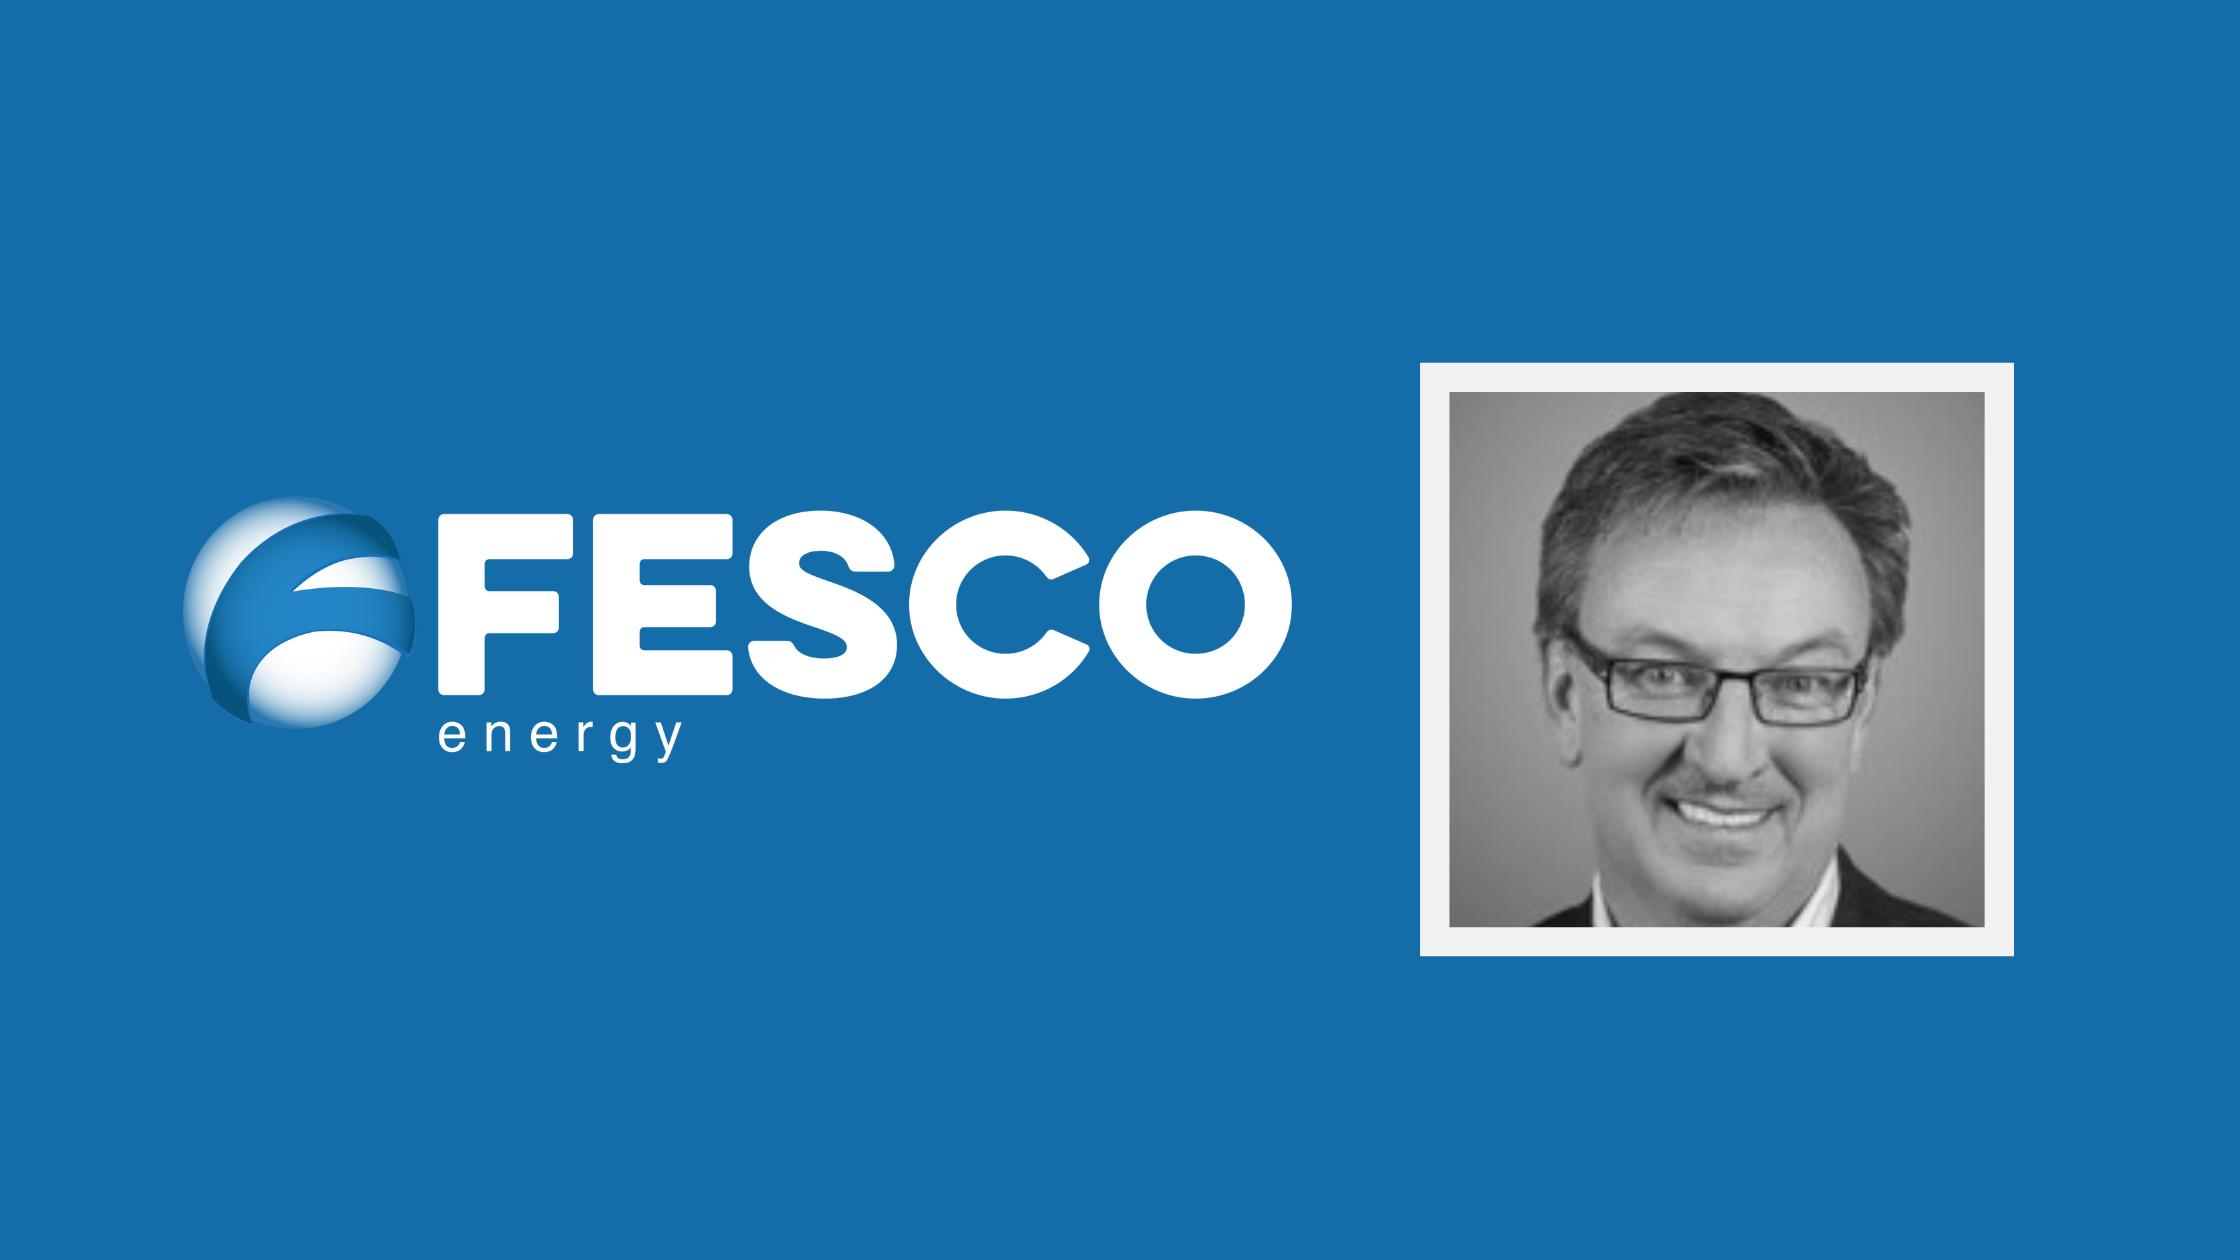 FESCO Energy welcomes industry veteran Jim Bland as President